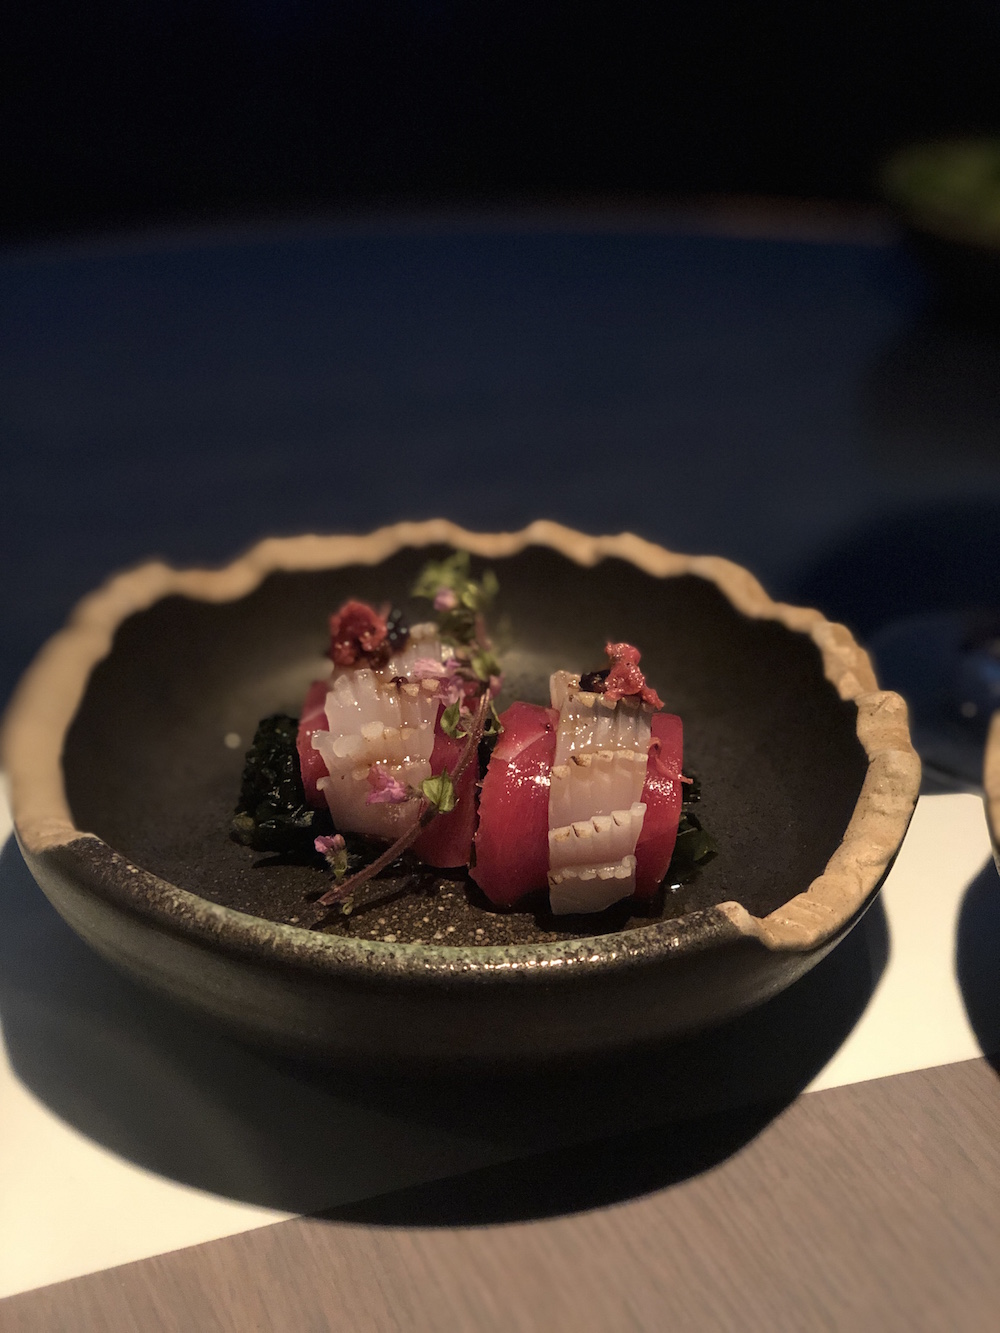 One of the Sakura-exclusive dishes at Aqua